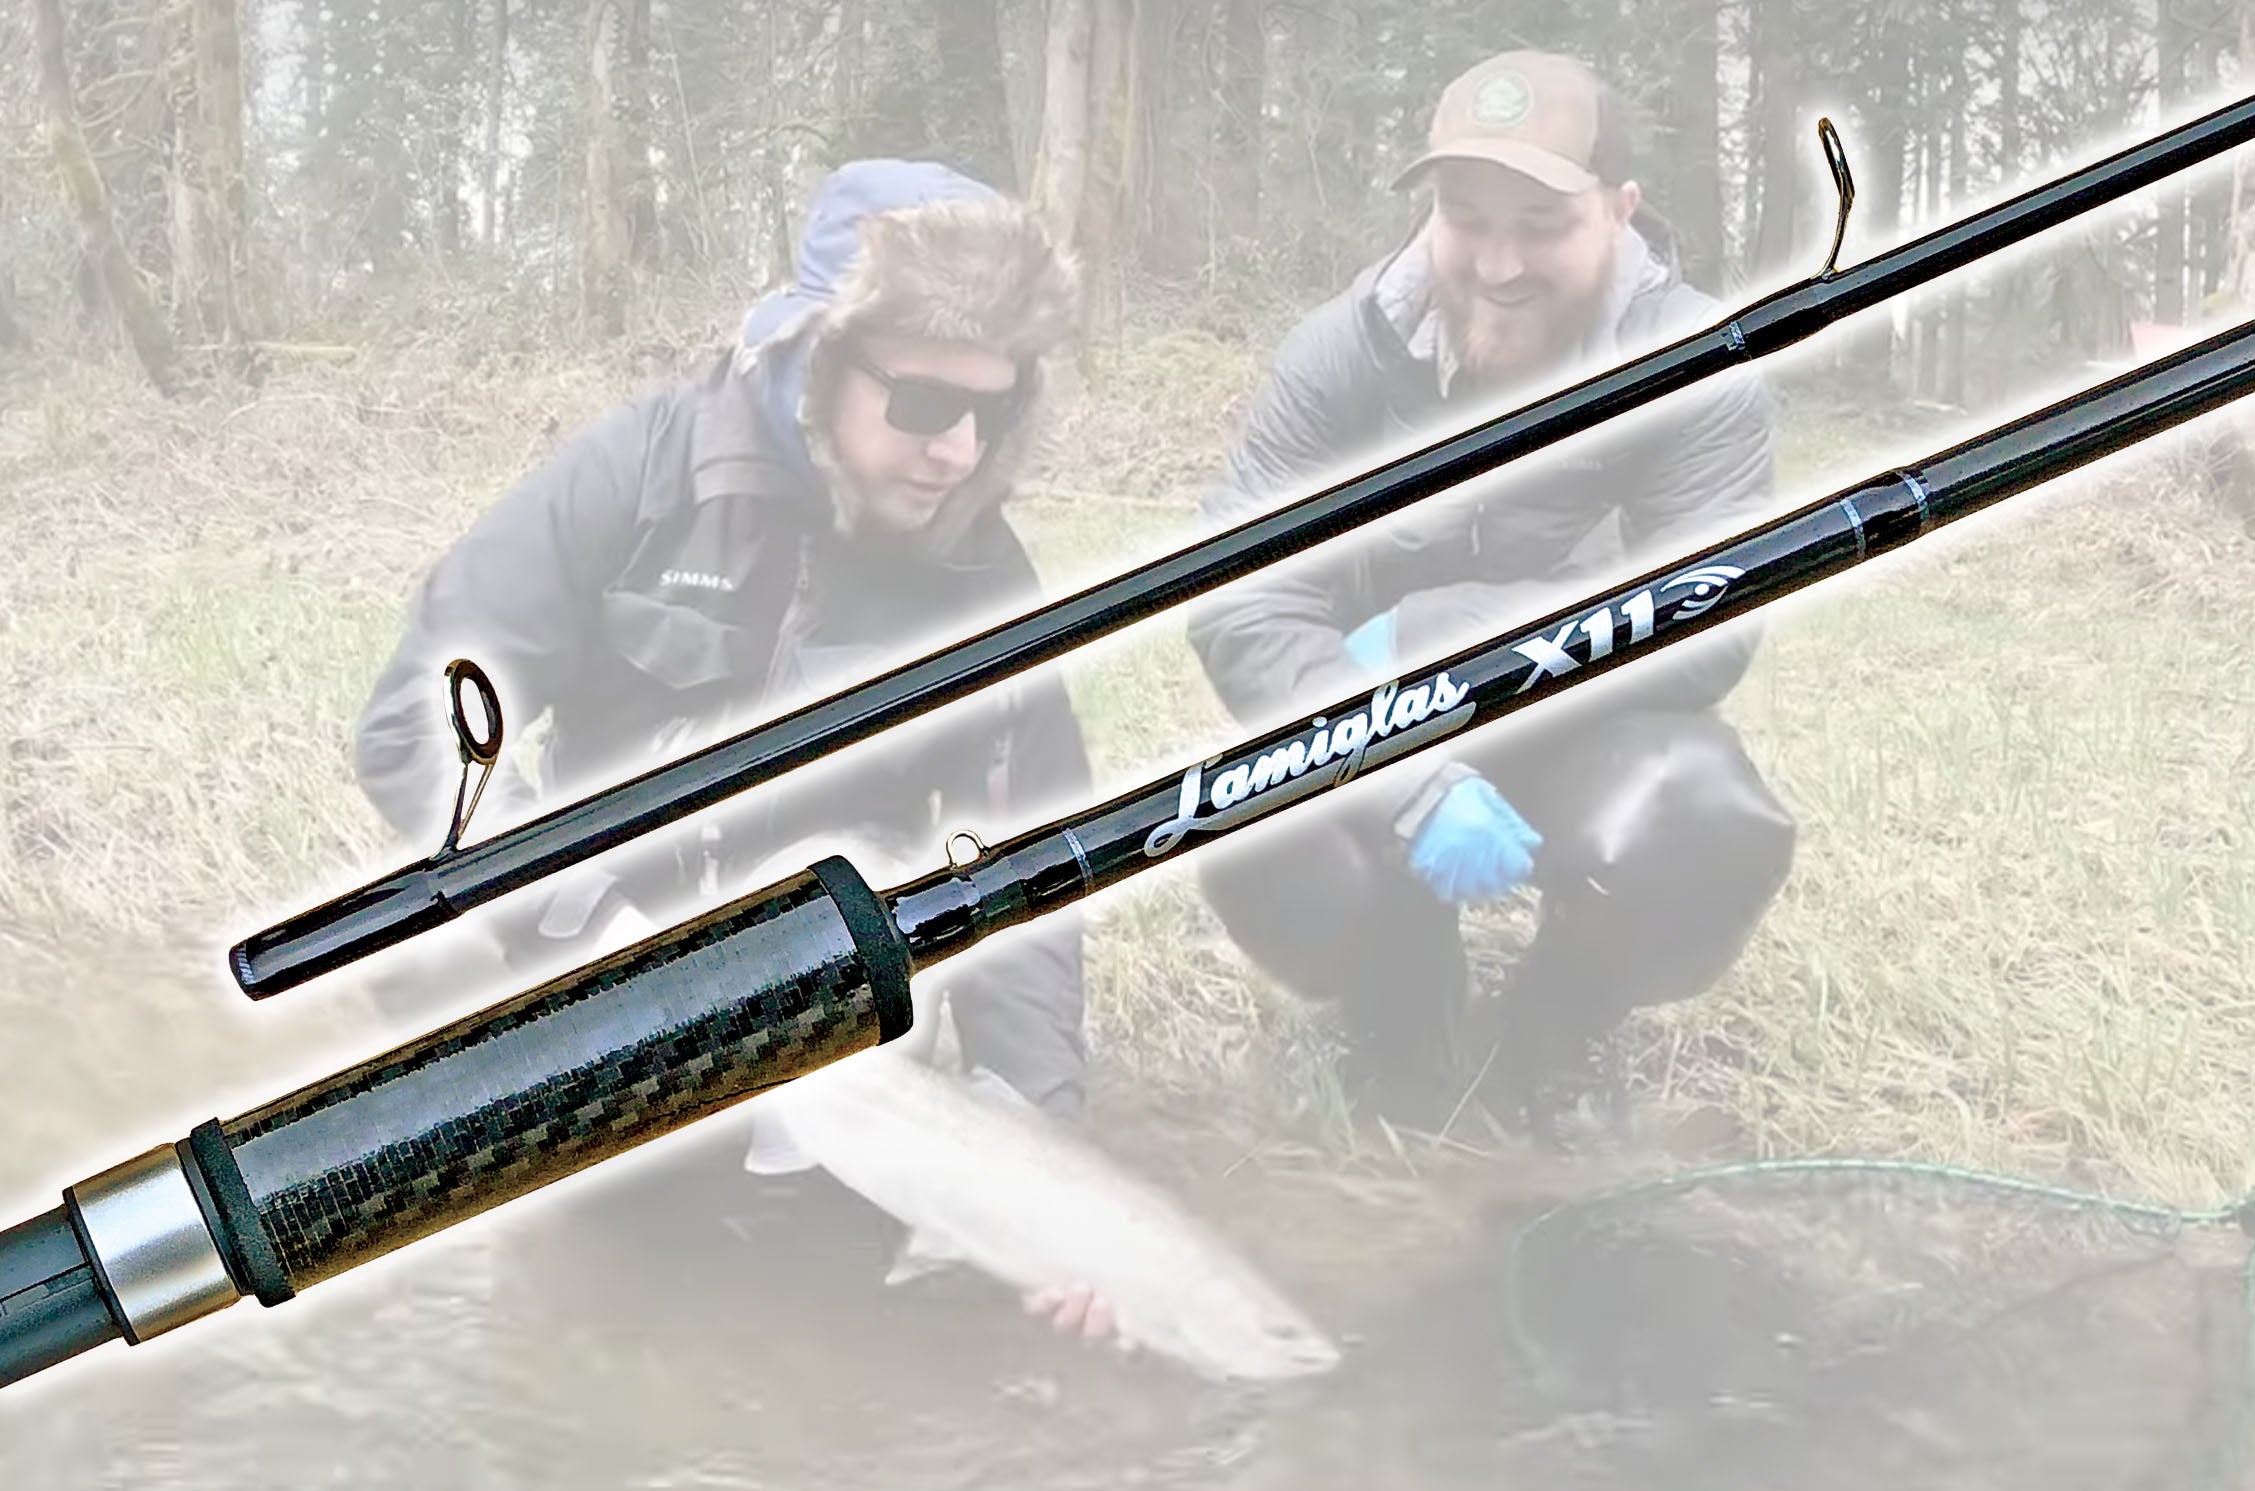 Lamiglas X-11 Salmon & Steelhead Spinning Rod